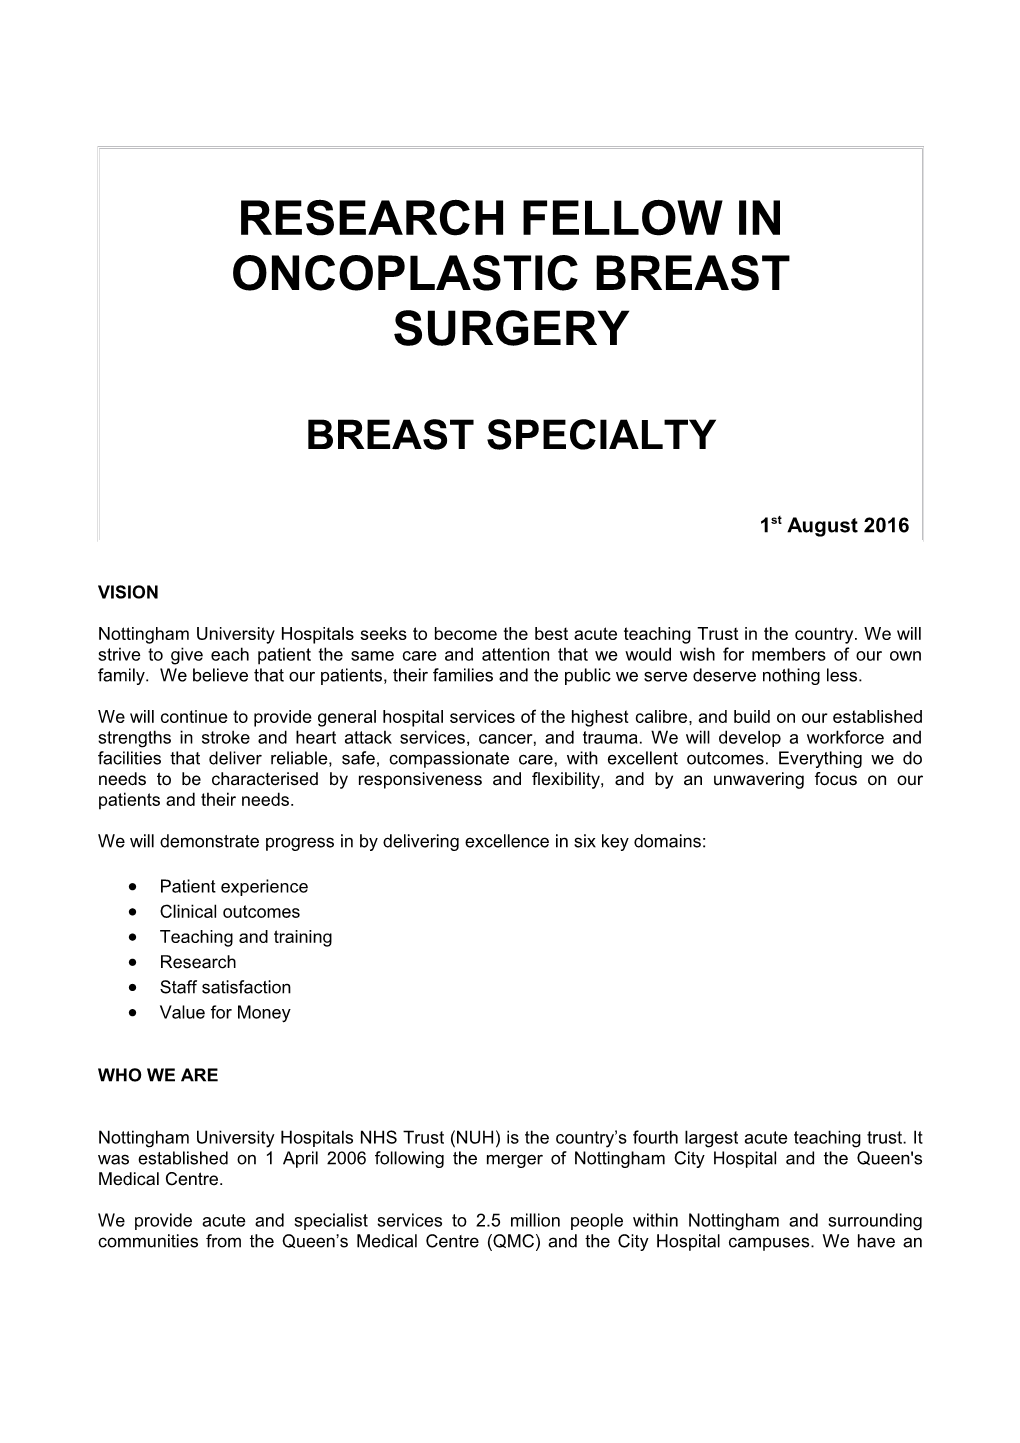 Research Fellow Inoncoplastic Breast Surgery